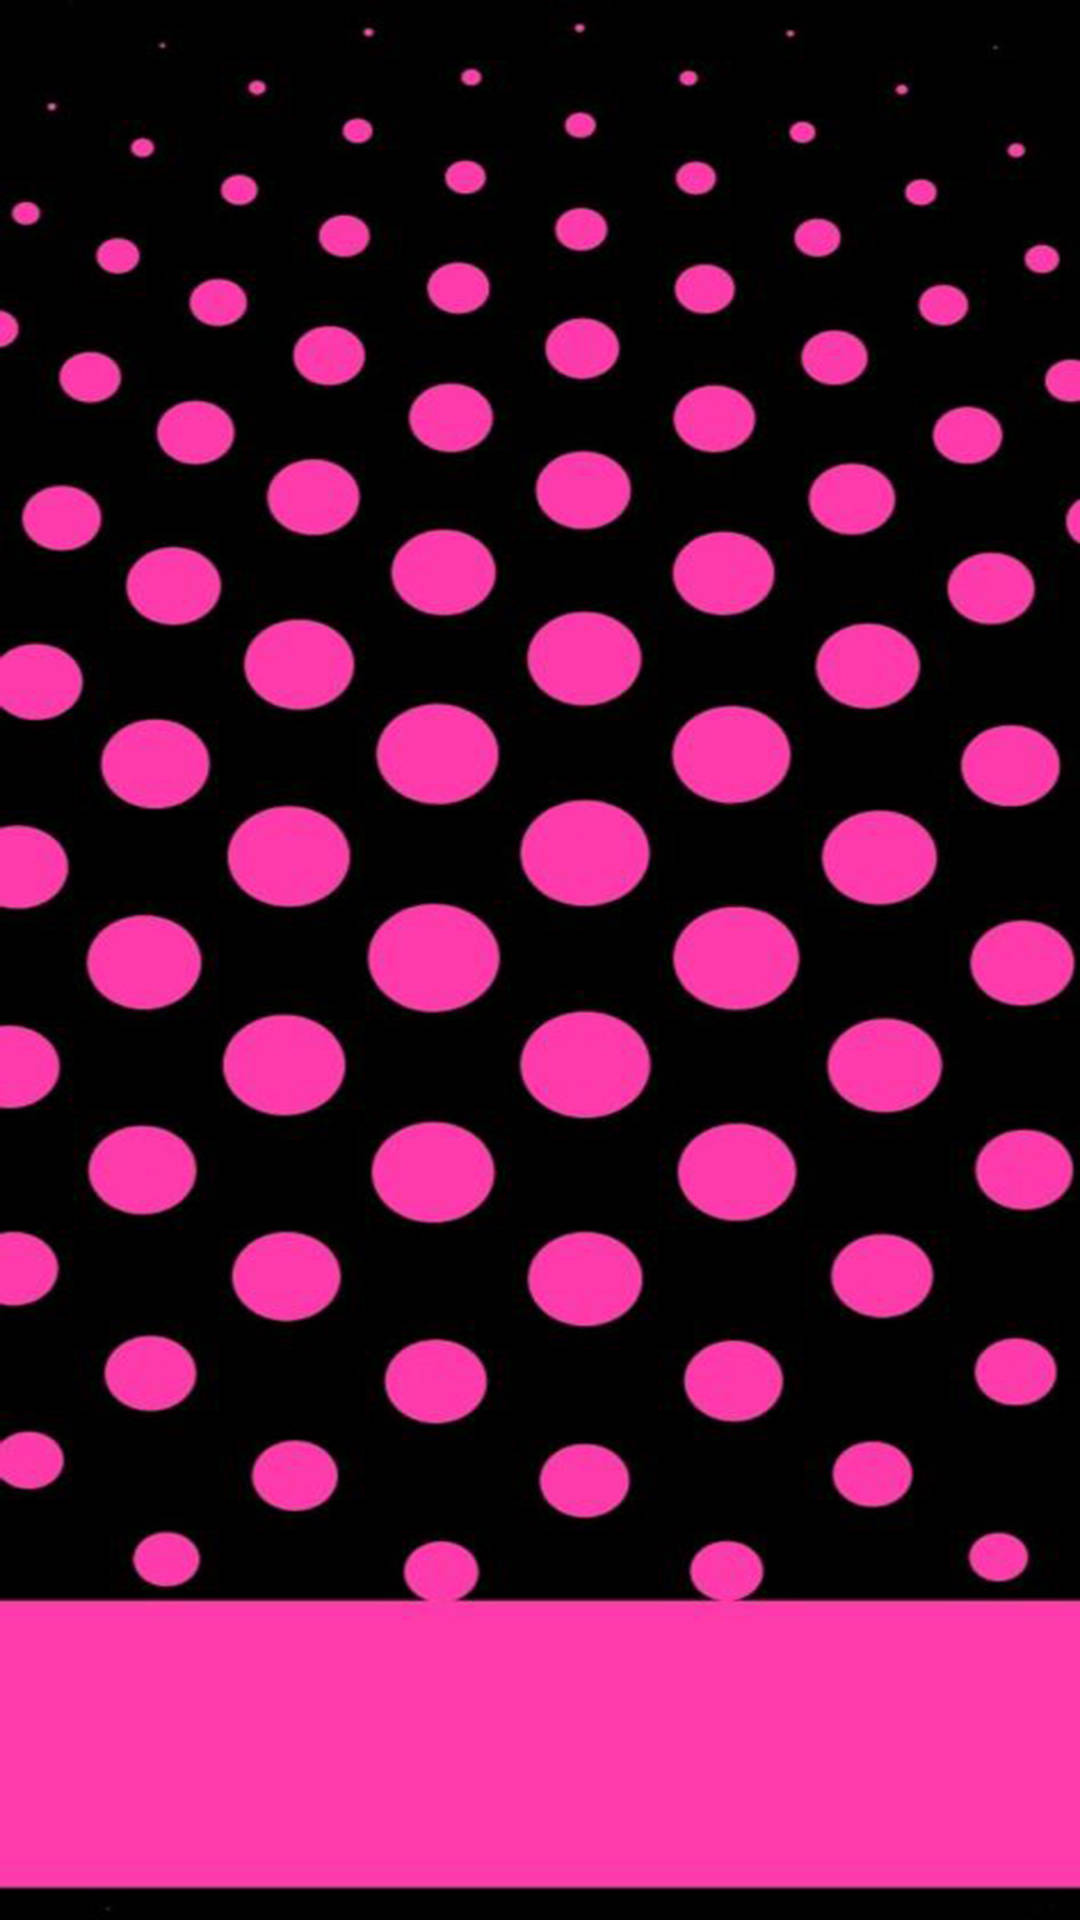 Black And Pink Aesthetic Circular Patterns